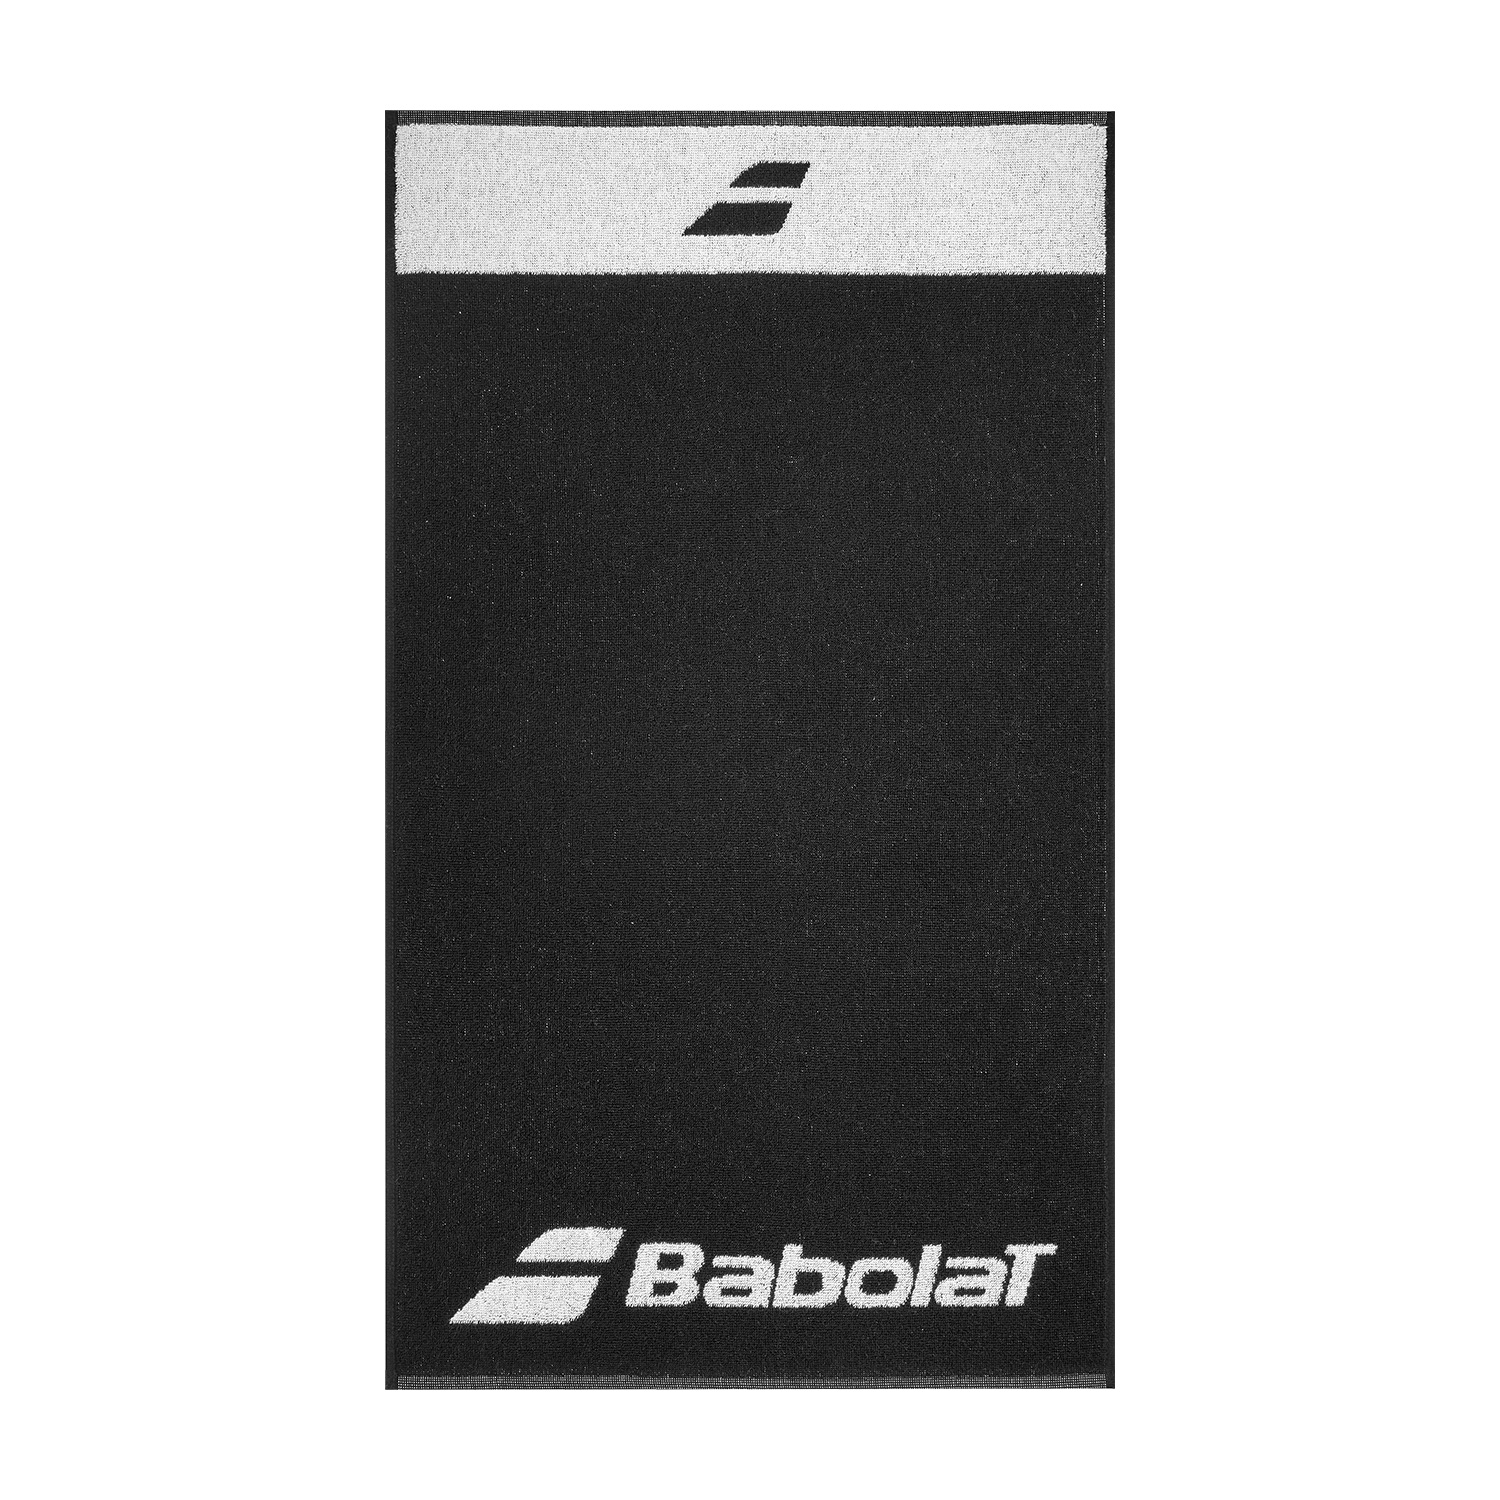 Babolat Graphic Towel - Black/White